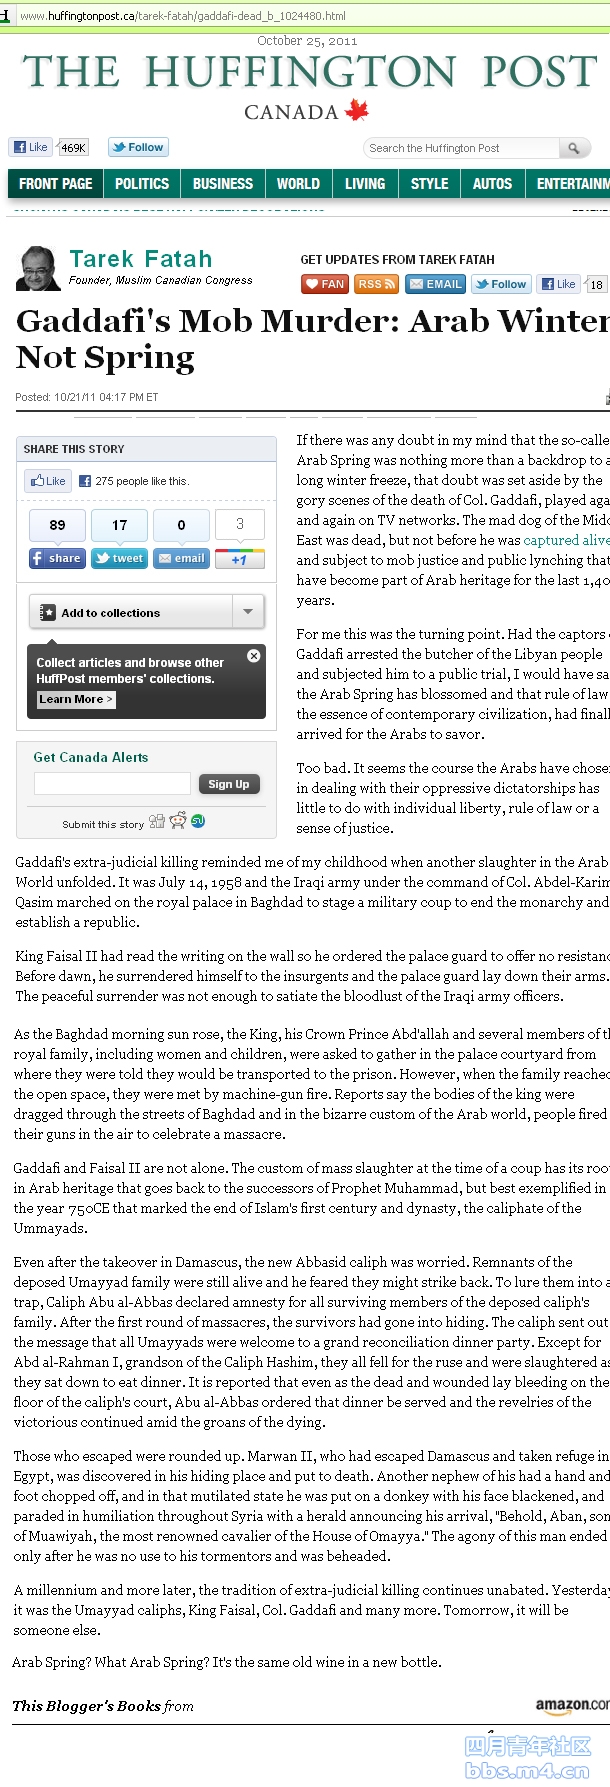 Gaddafi_s Mob Murder_Huffington Post_2011_10_21_01.jpg